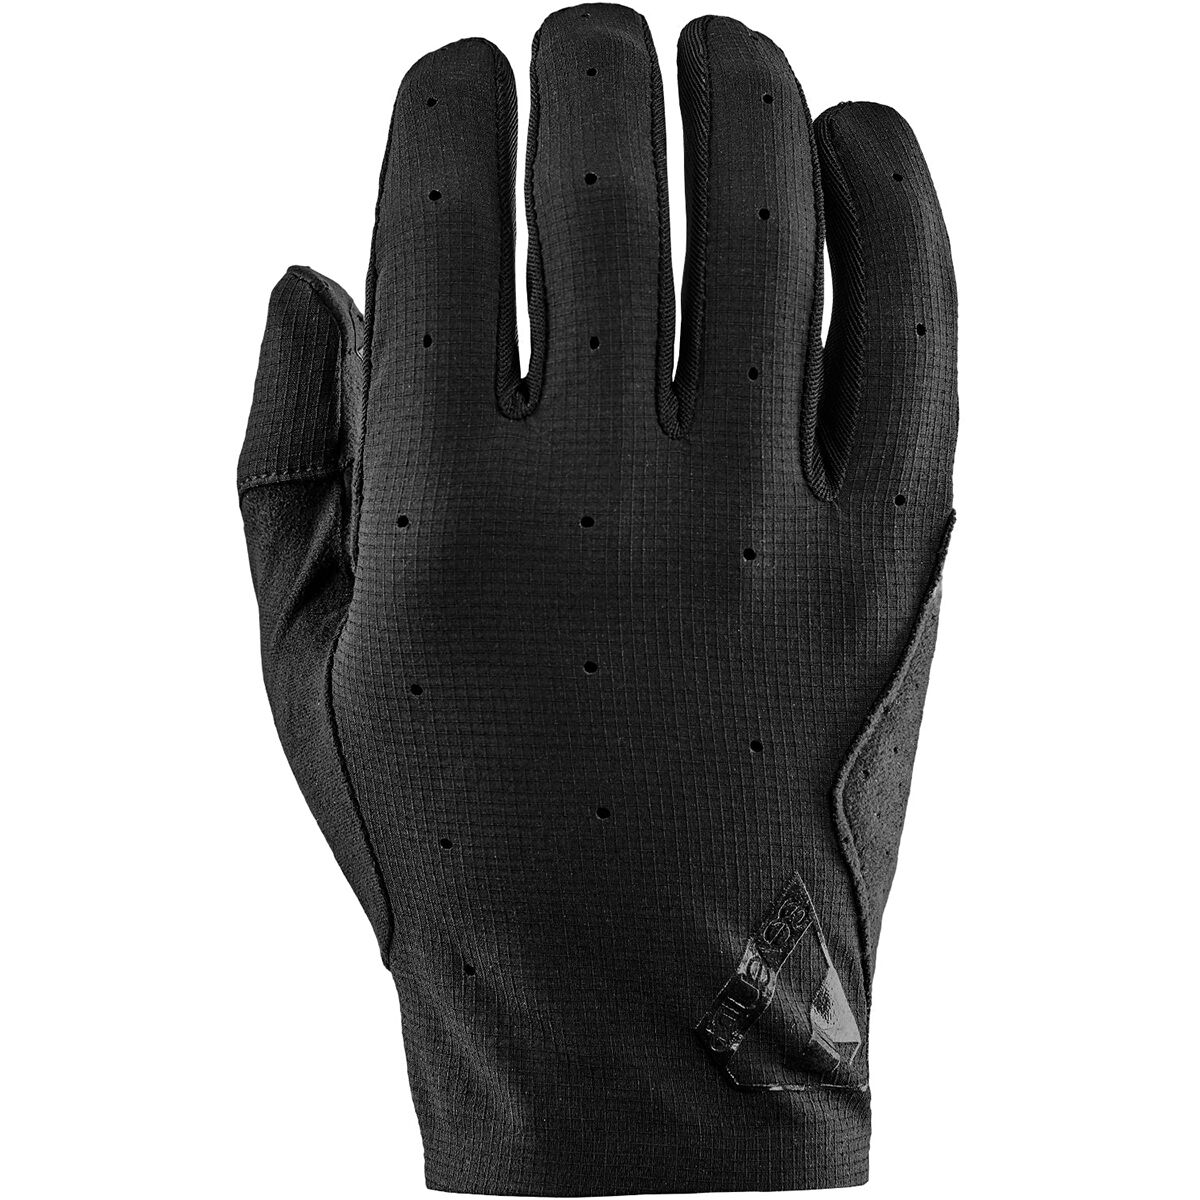 7 Protection Control Glove - Men's Black, M